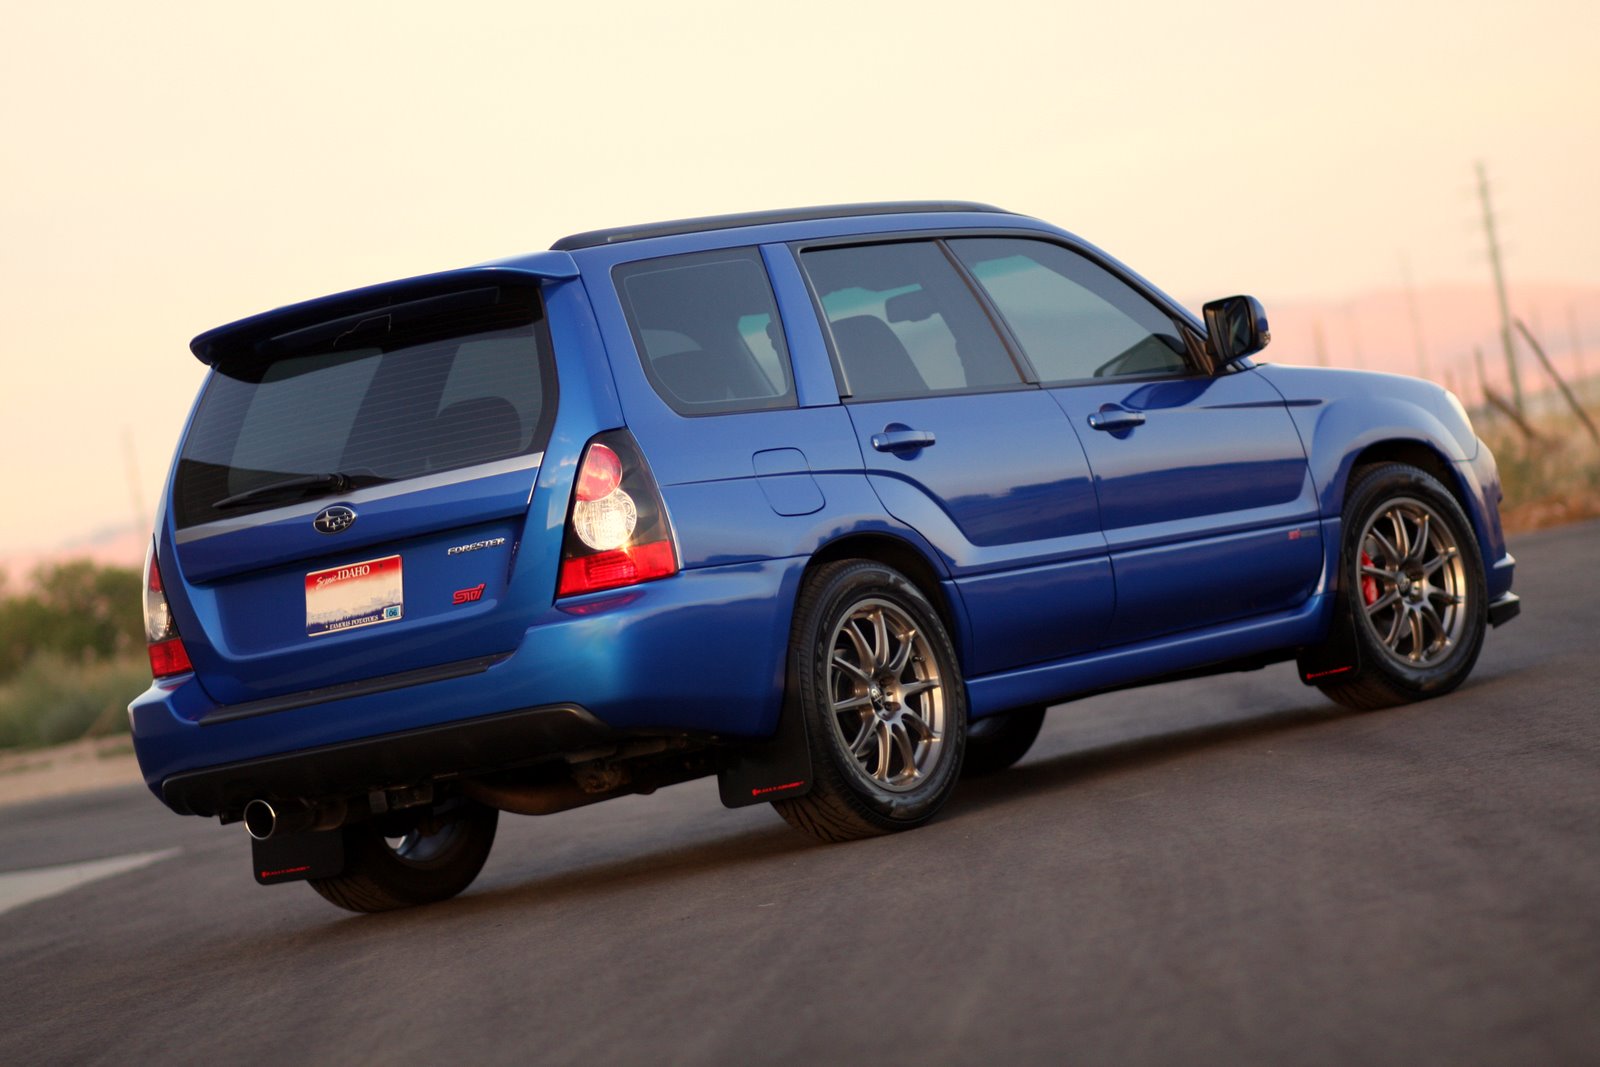  2007 Subaru Forester Sports XT